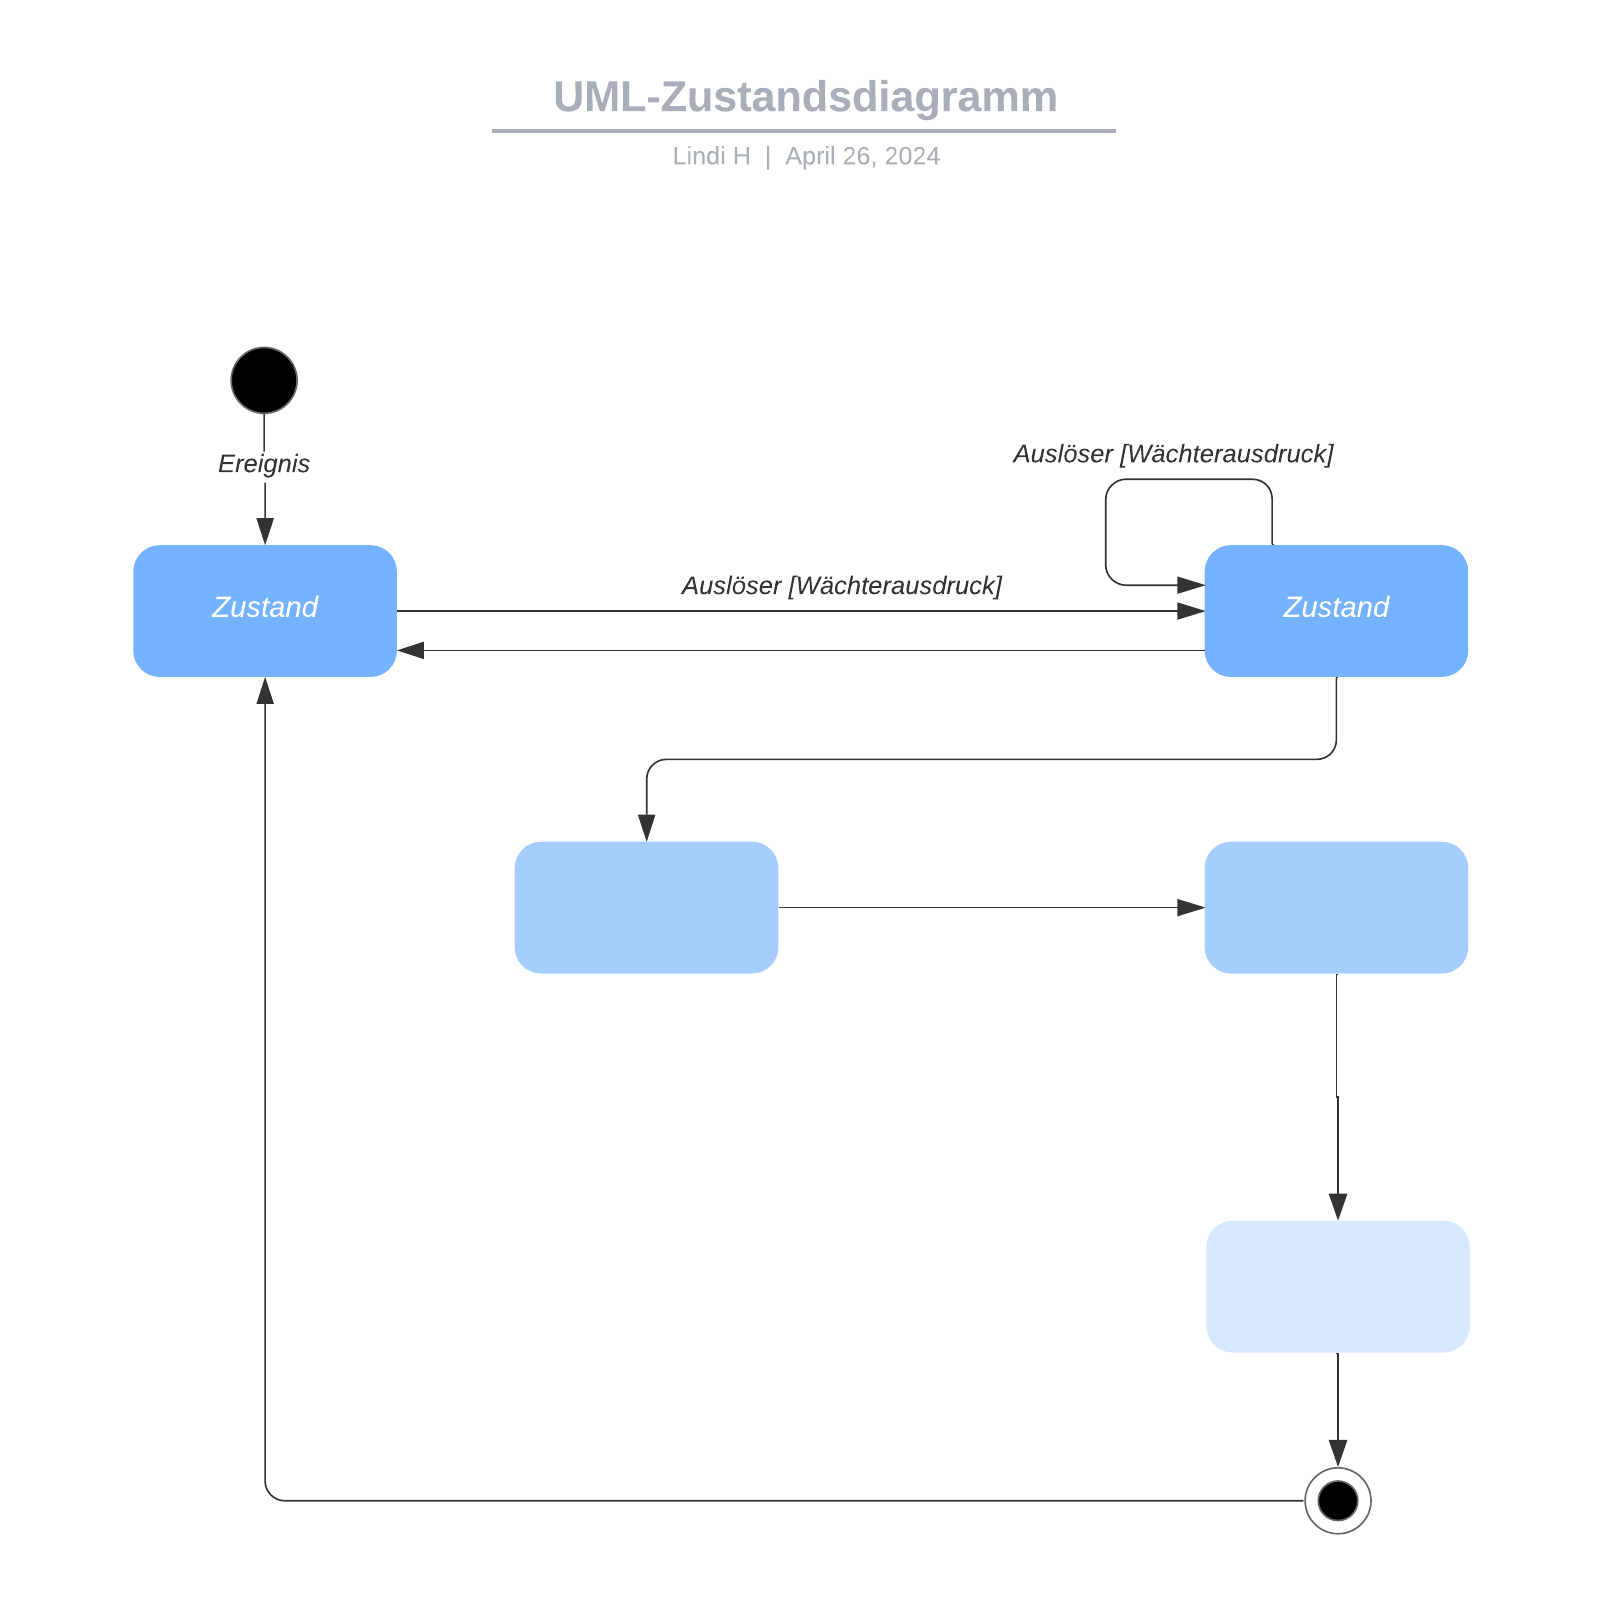 UML-Zustandsdiagramm